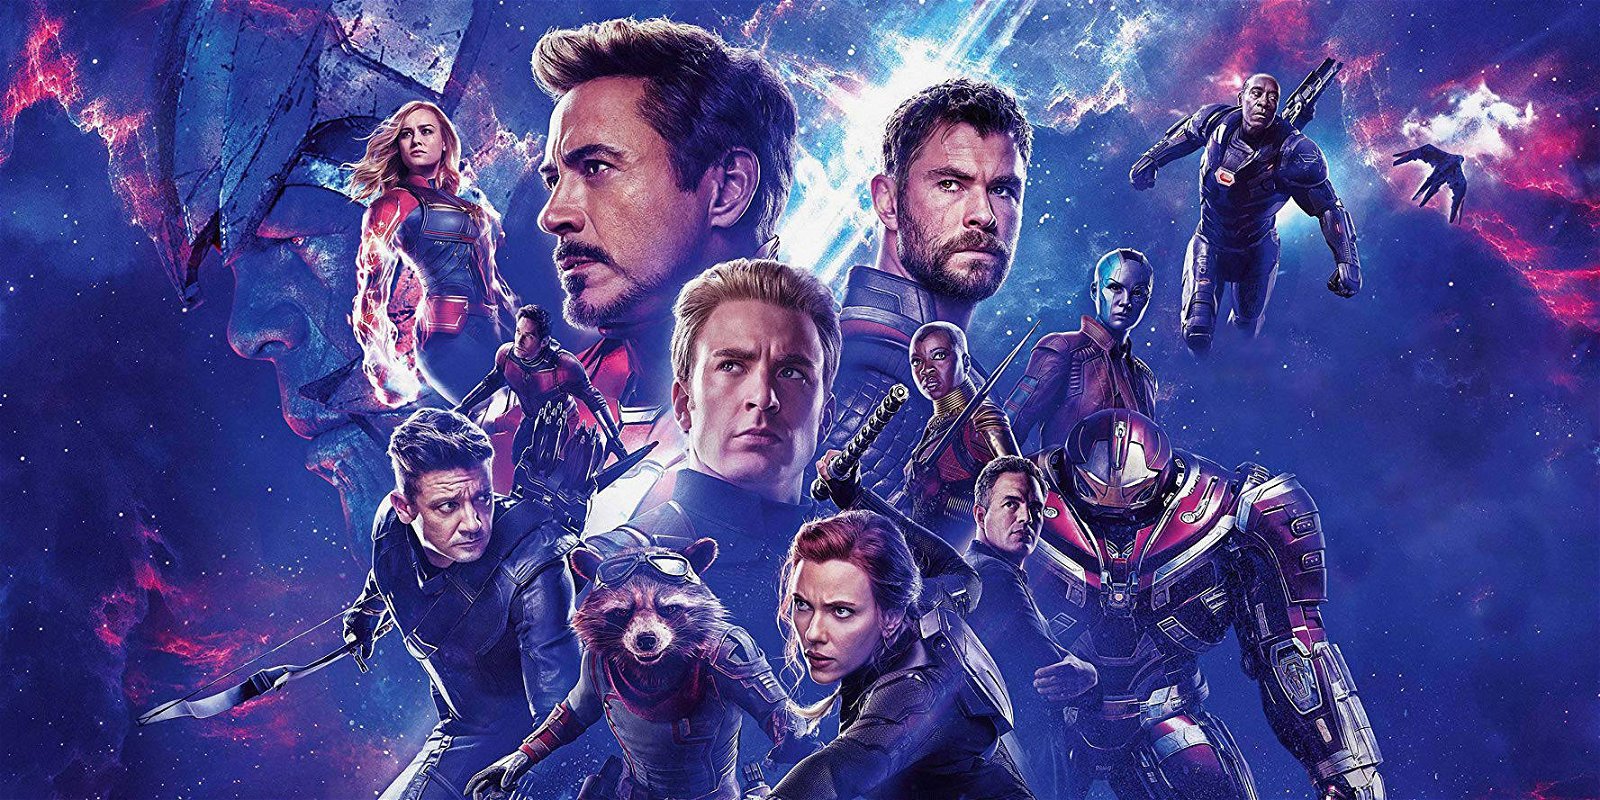 Immagine di Avengers: Endgame versione estesa. Quali le scene bonus?